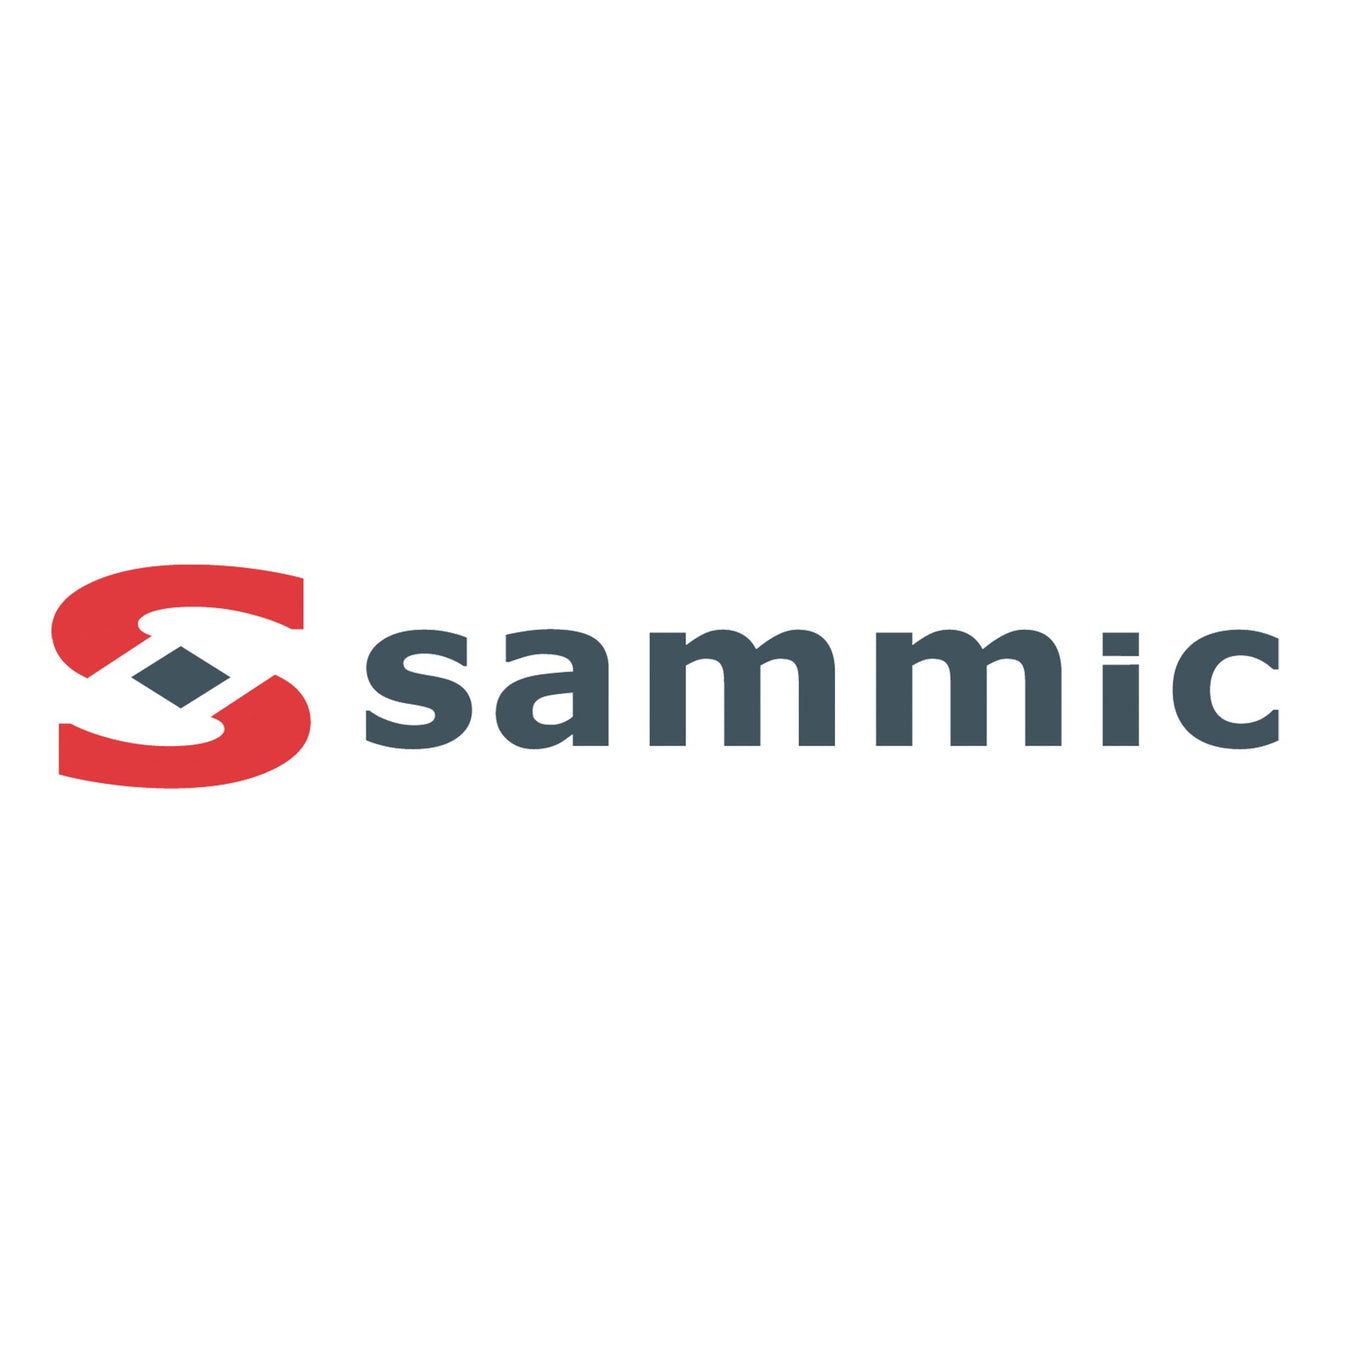 Sammic - Gecko Catering Equipment